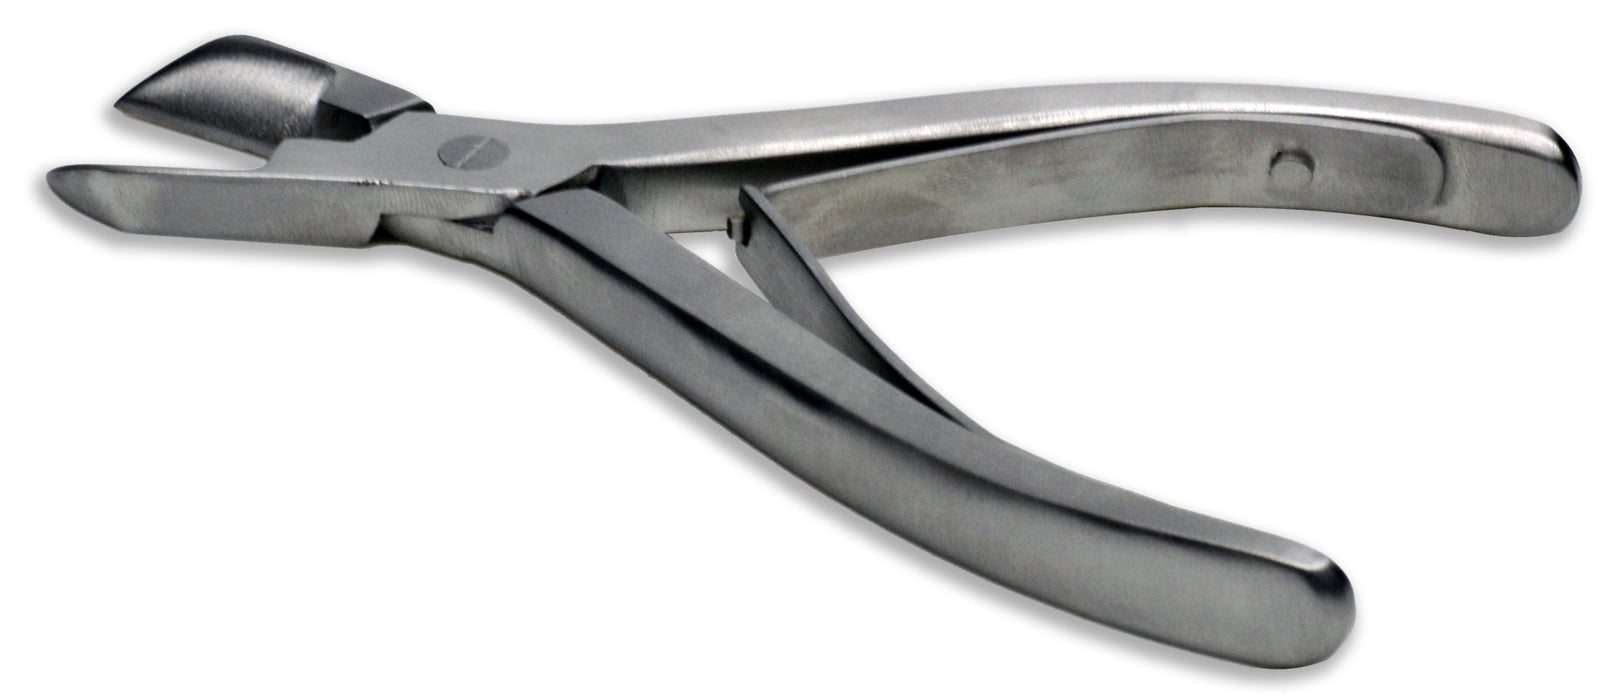 Bone Cutting Forceps, 6 Inch - Return Spring & Locking Arm - Stainless Steel